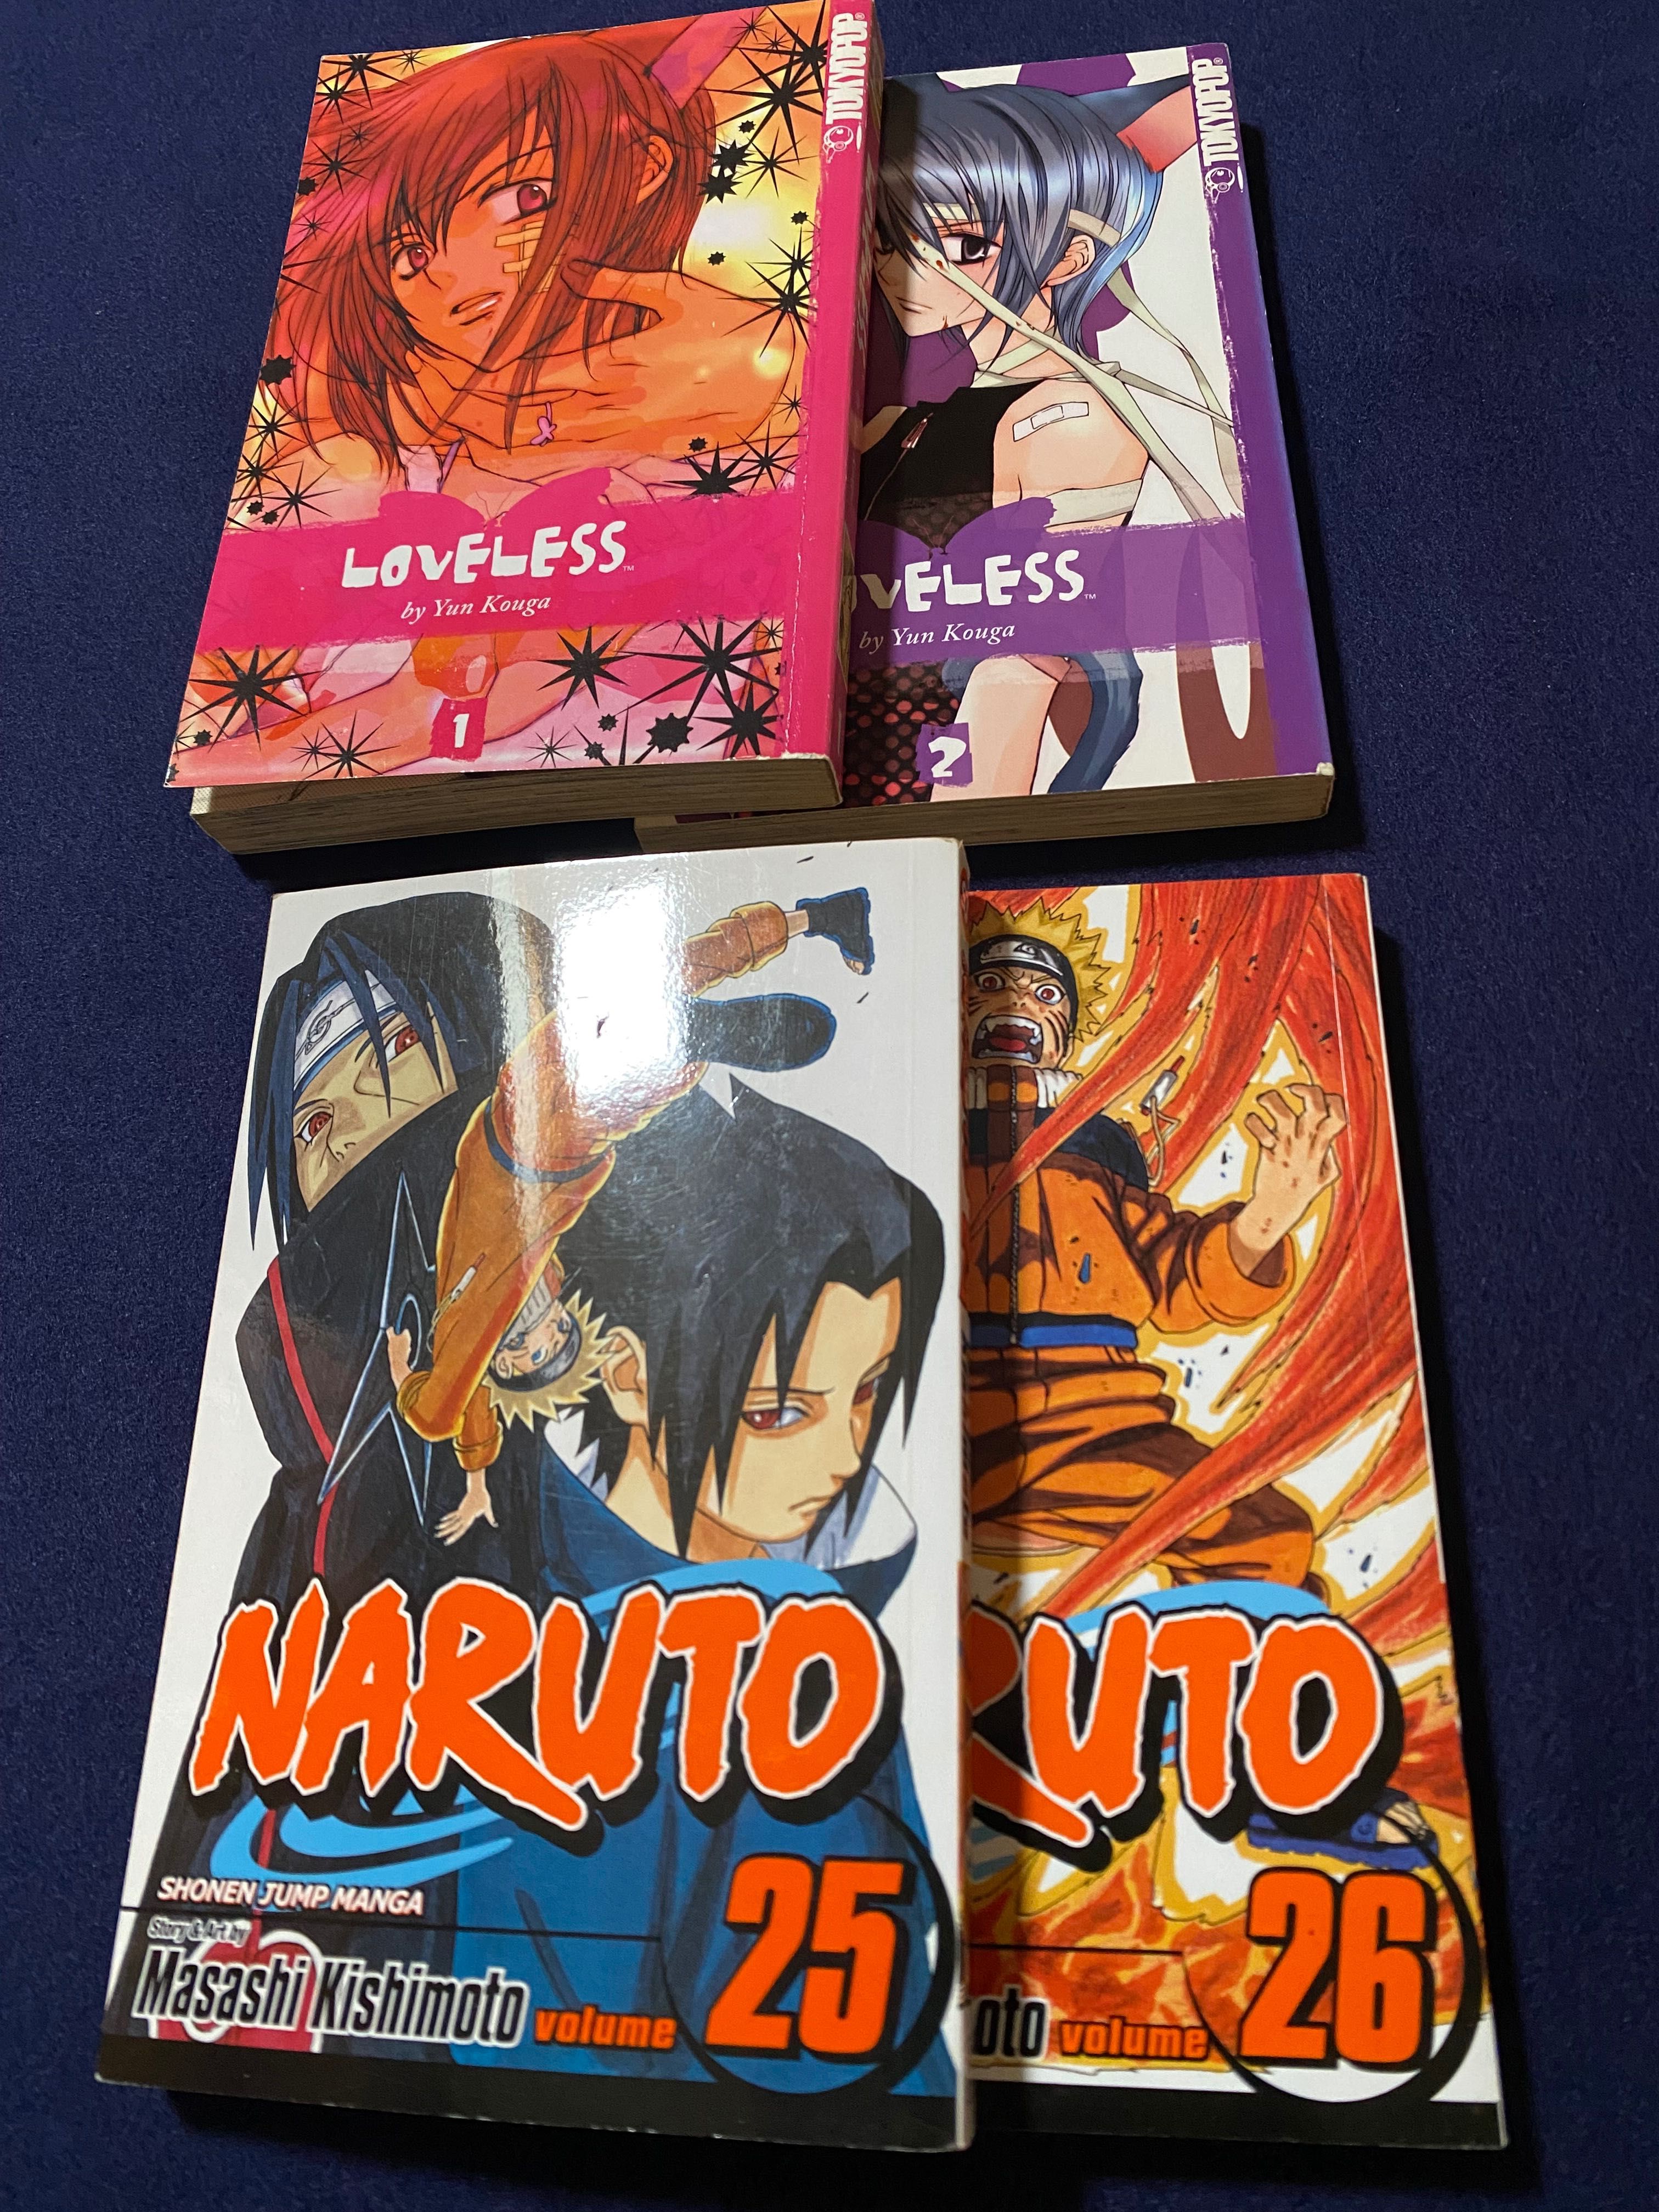 [ ENG Manga] Golden Kamuy, Naruto e Loveless